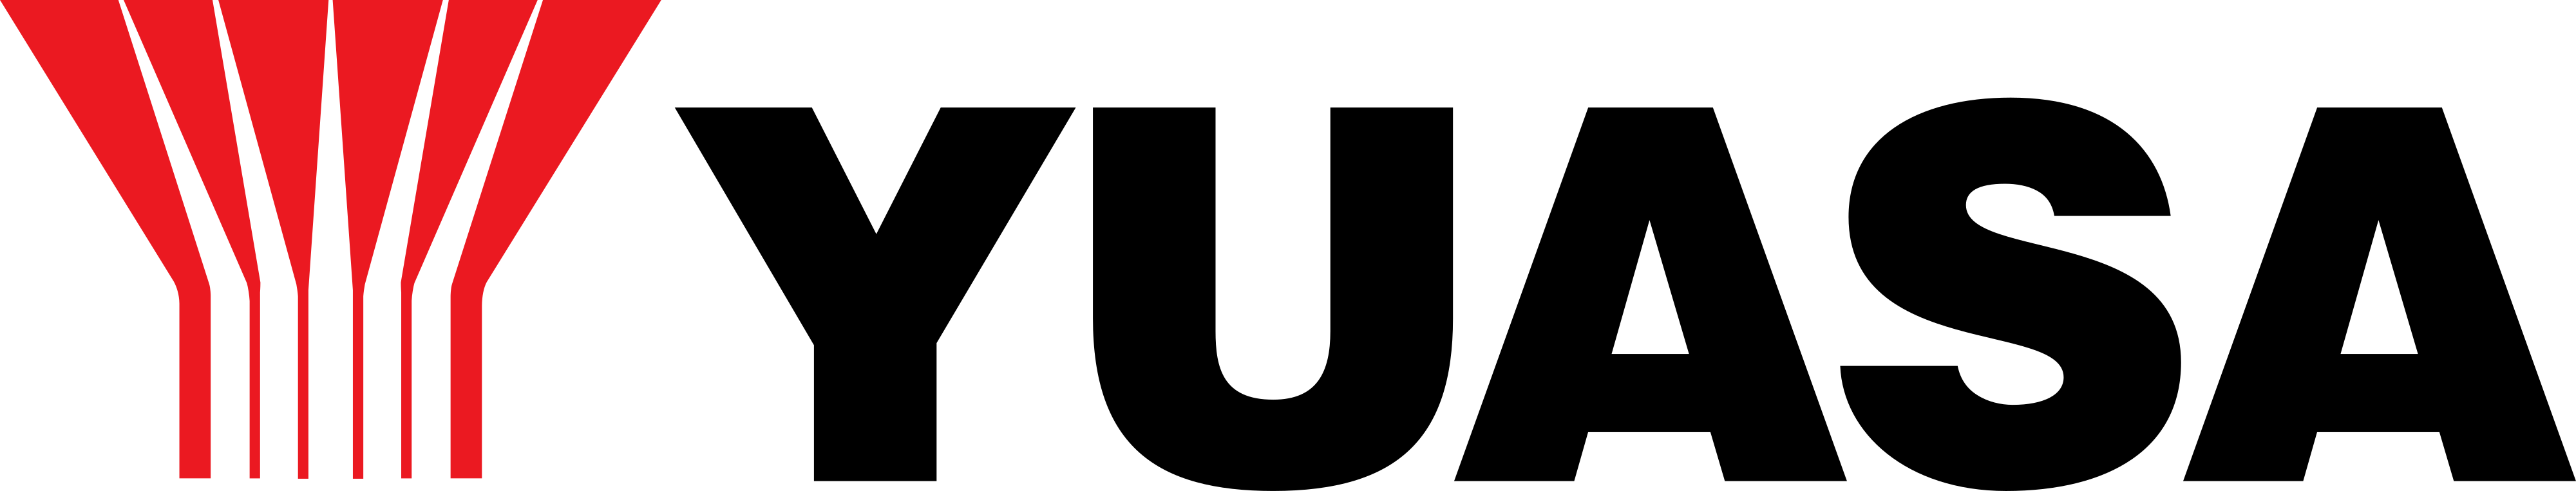 Yuasa logo - download.